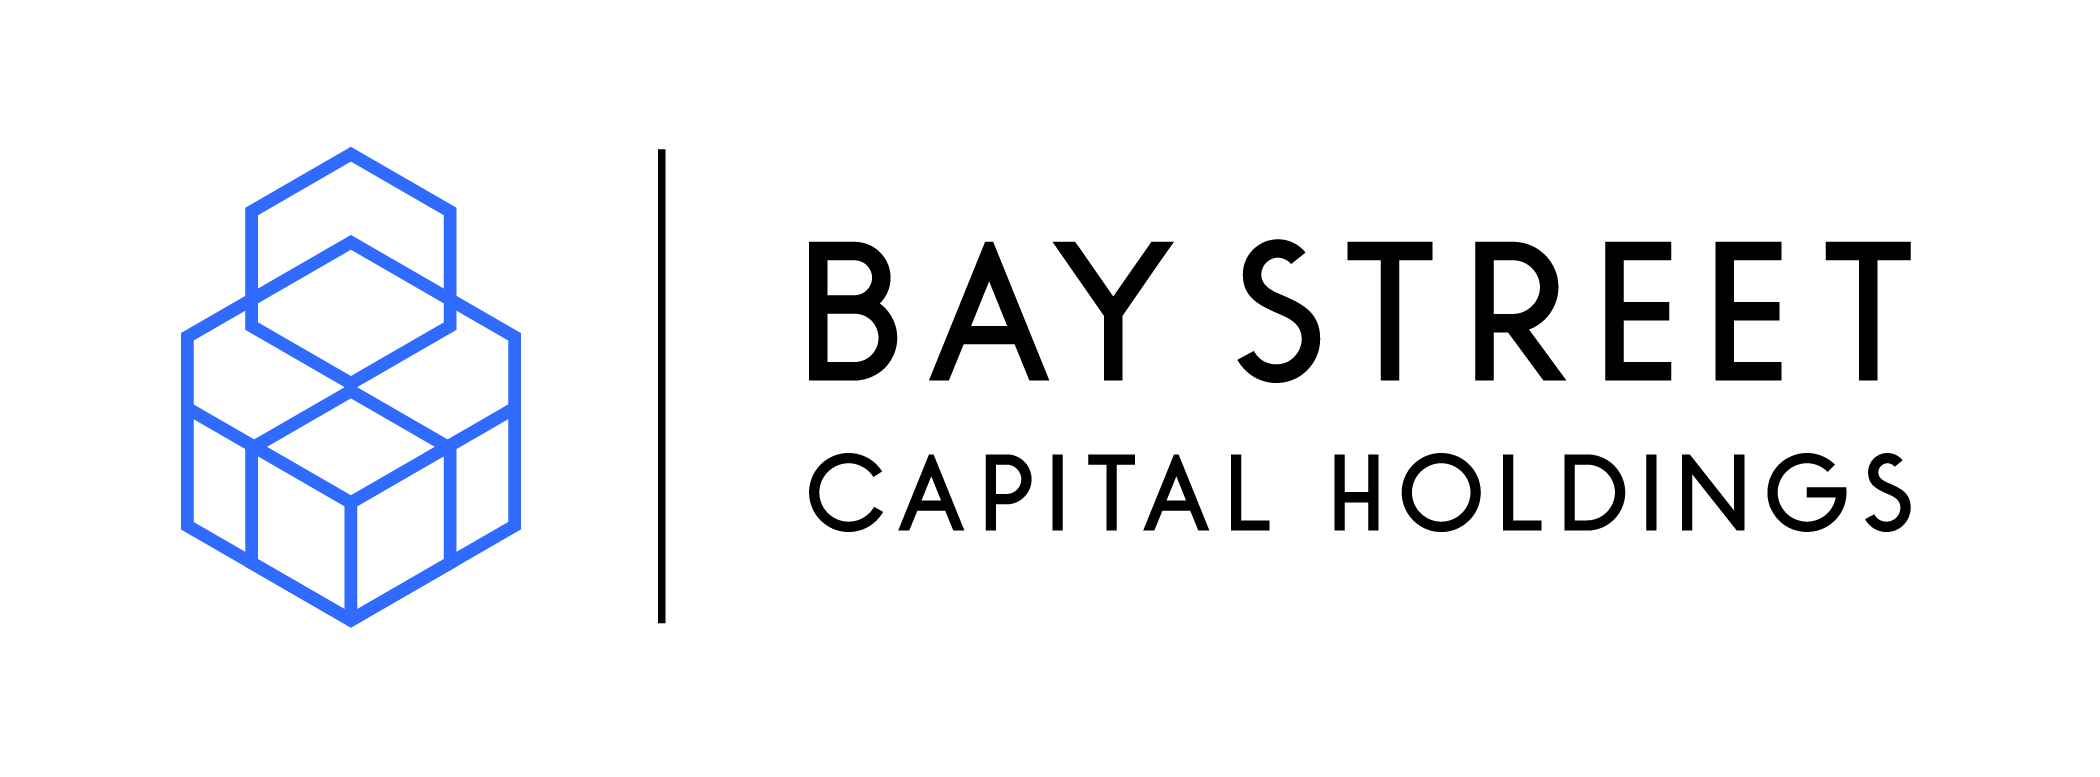 Bay Street Capital Holdings Logo